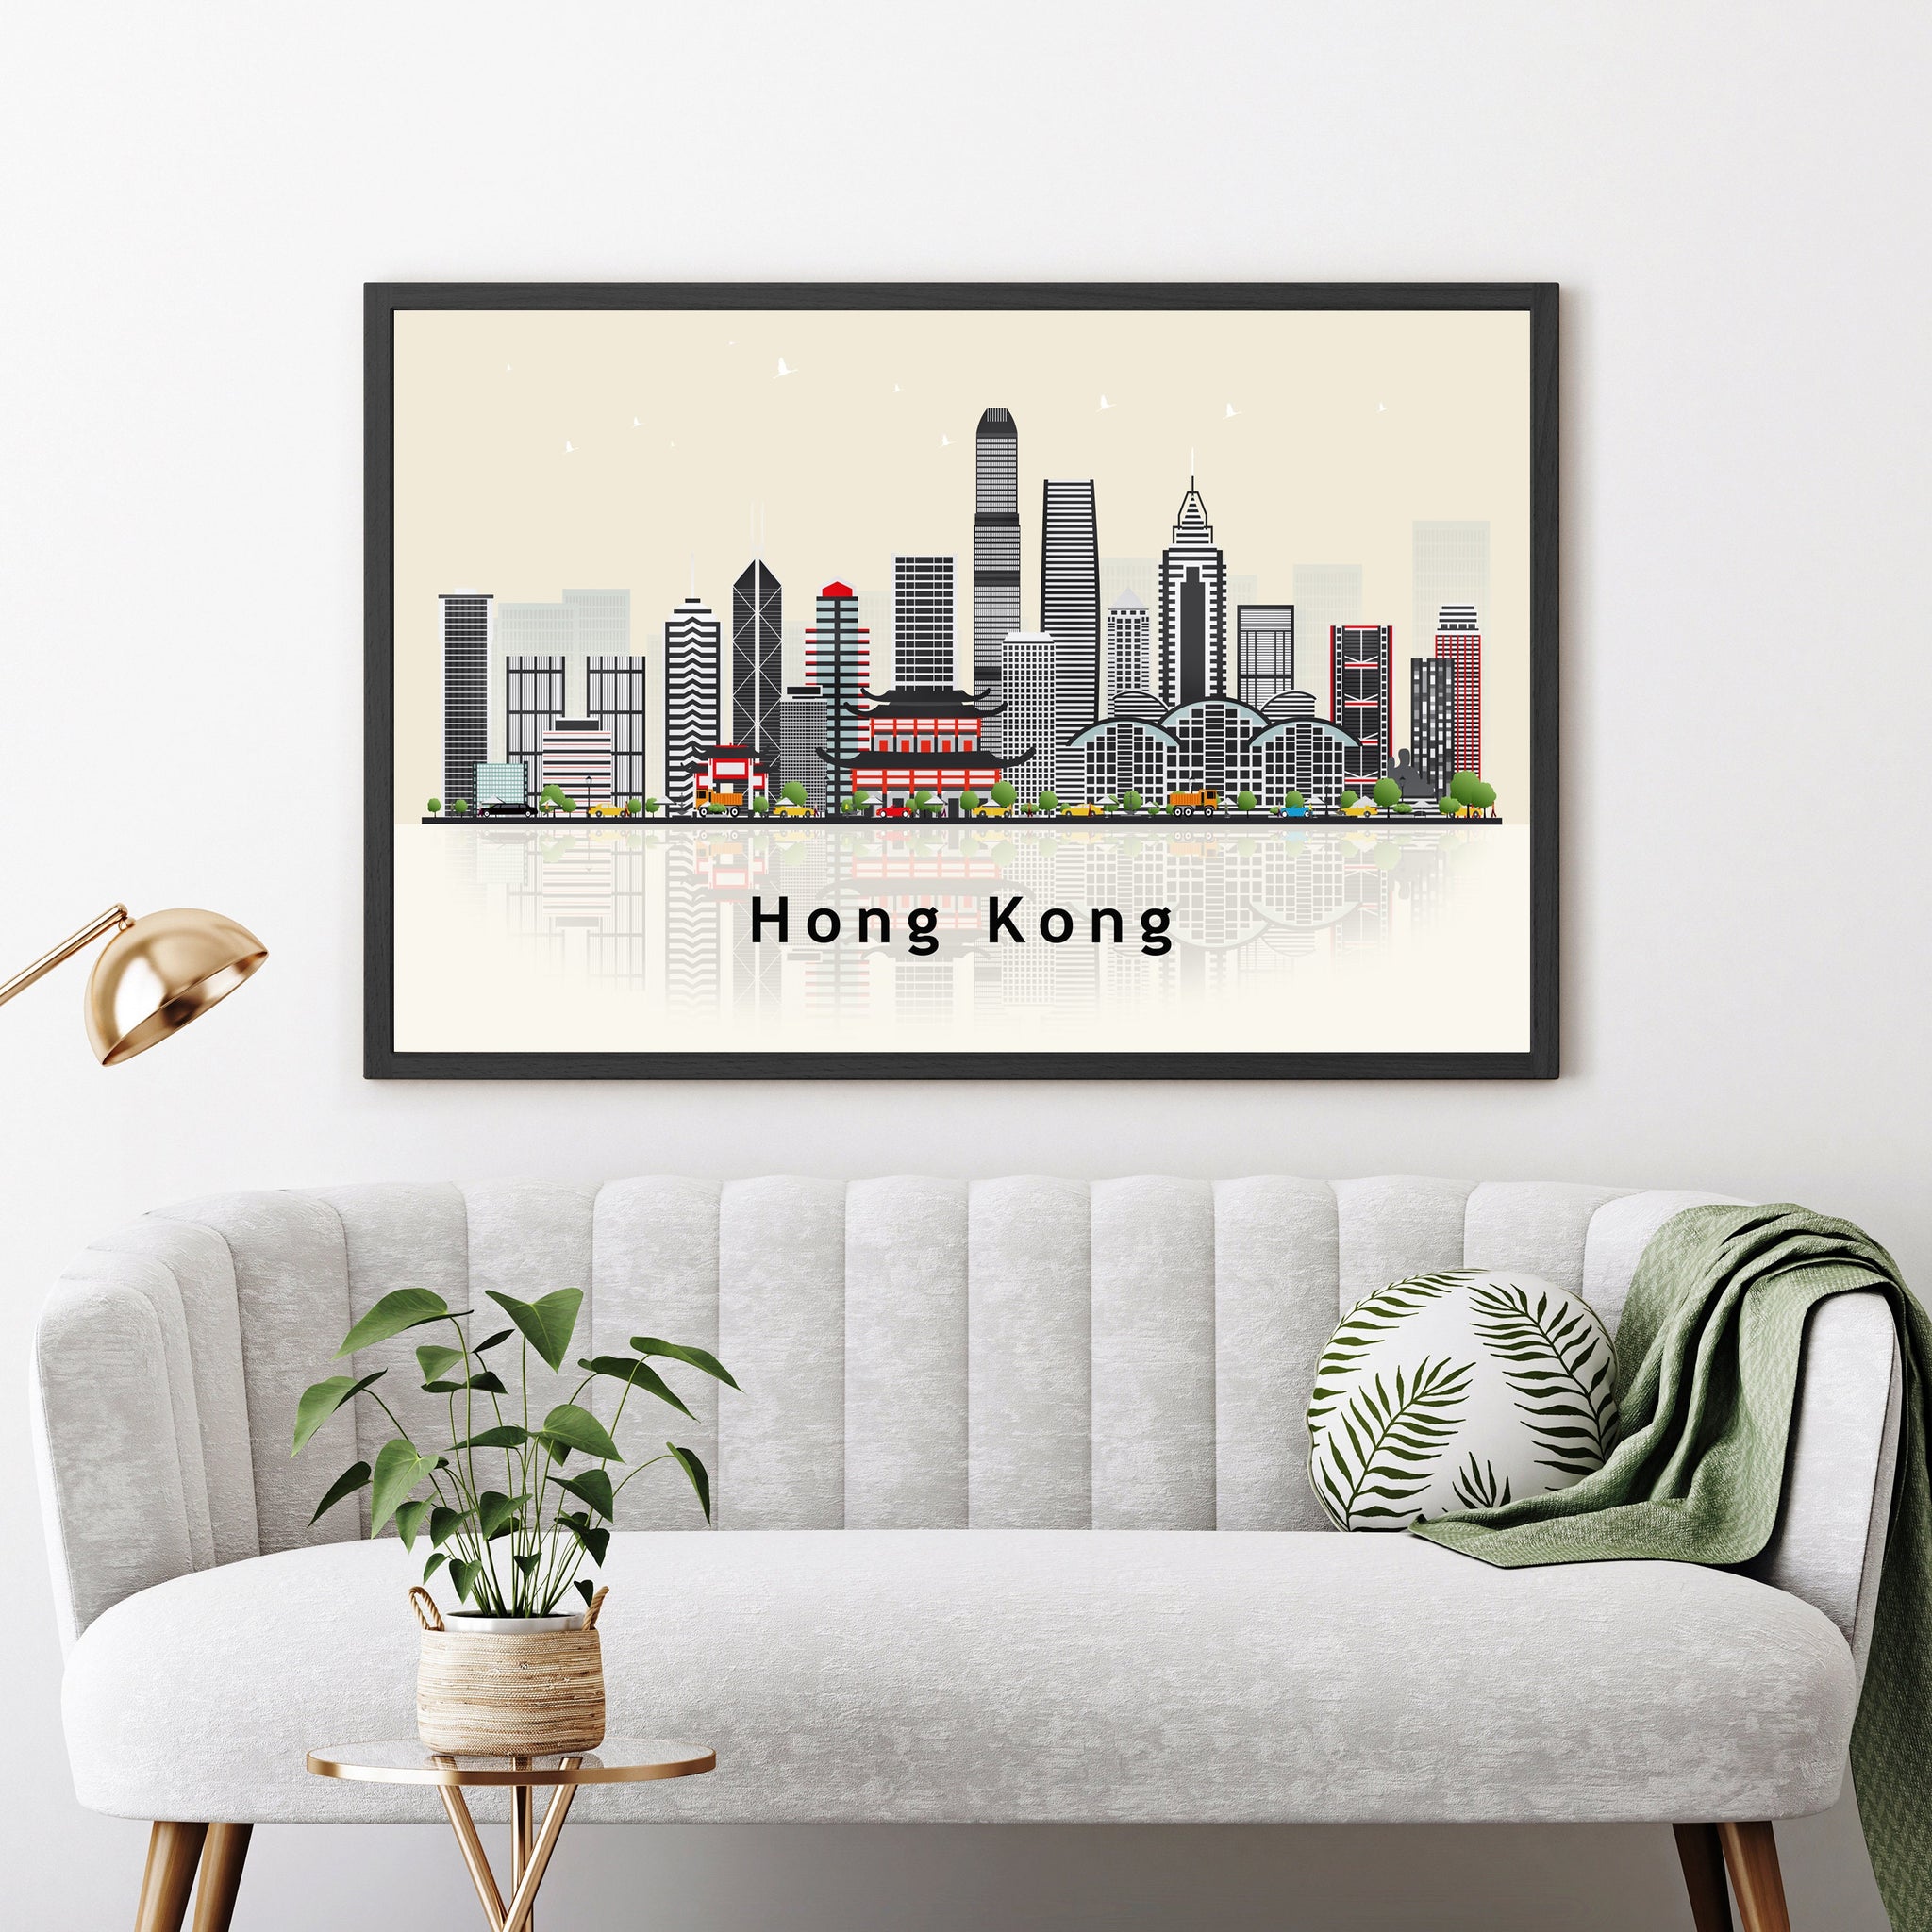 HONG KONG Illustration skyline poster, Modern skyline cityscape poster, Hong Kong skyline landmark map poster, Home wall decoration